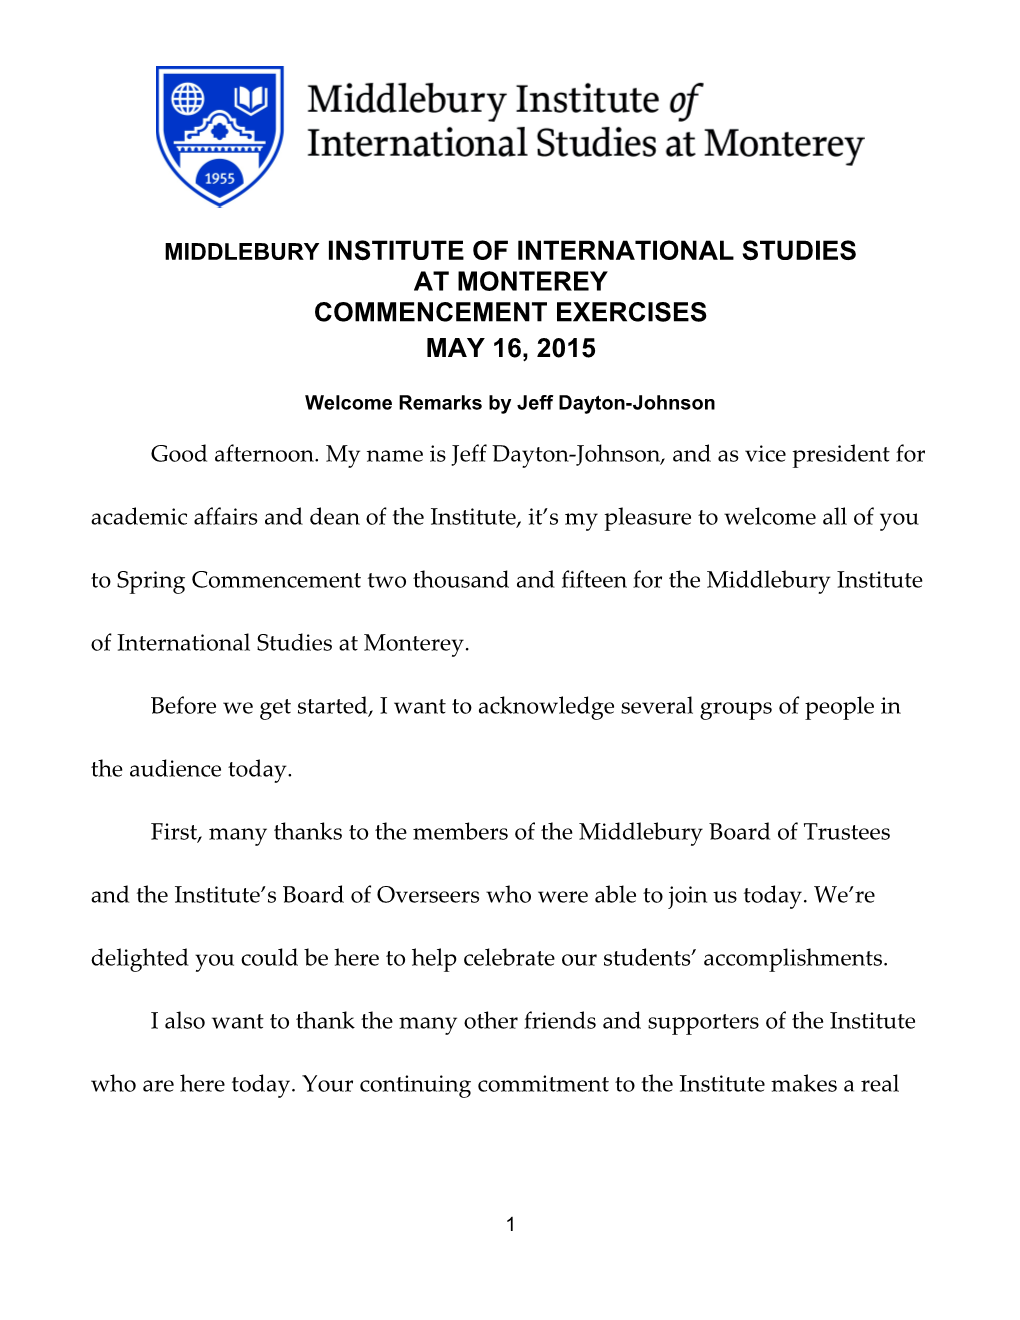 The Monterey Institute of International Studies